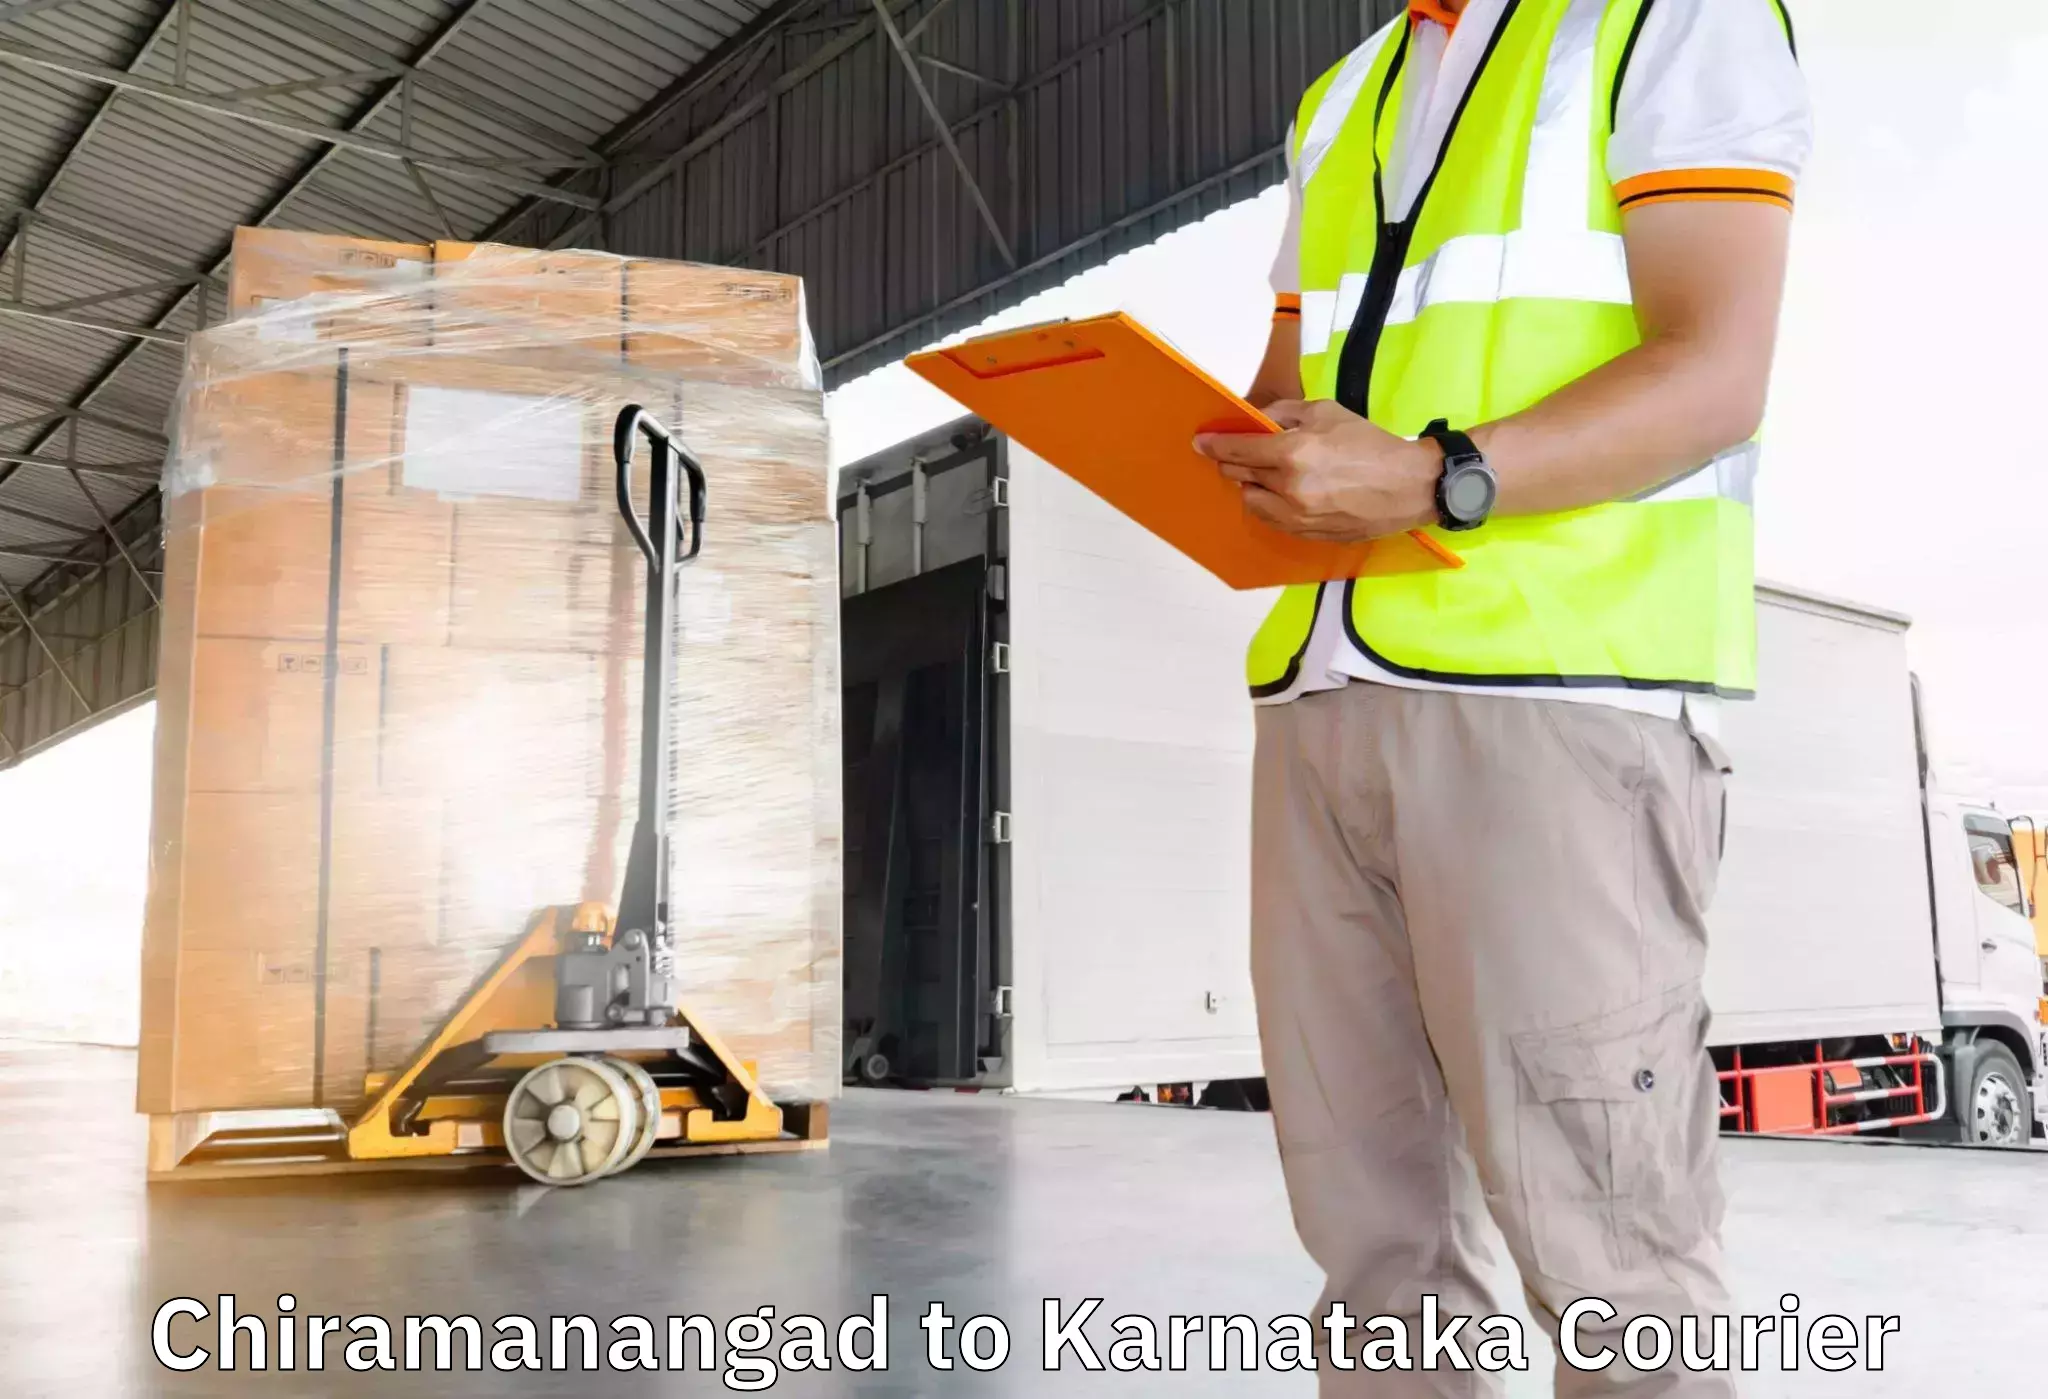 Furniture delivery service Chiramanangad to Pavagada